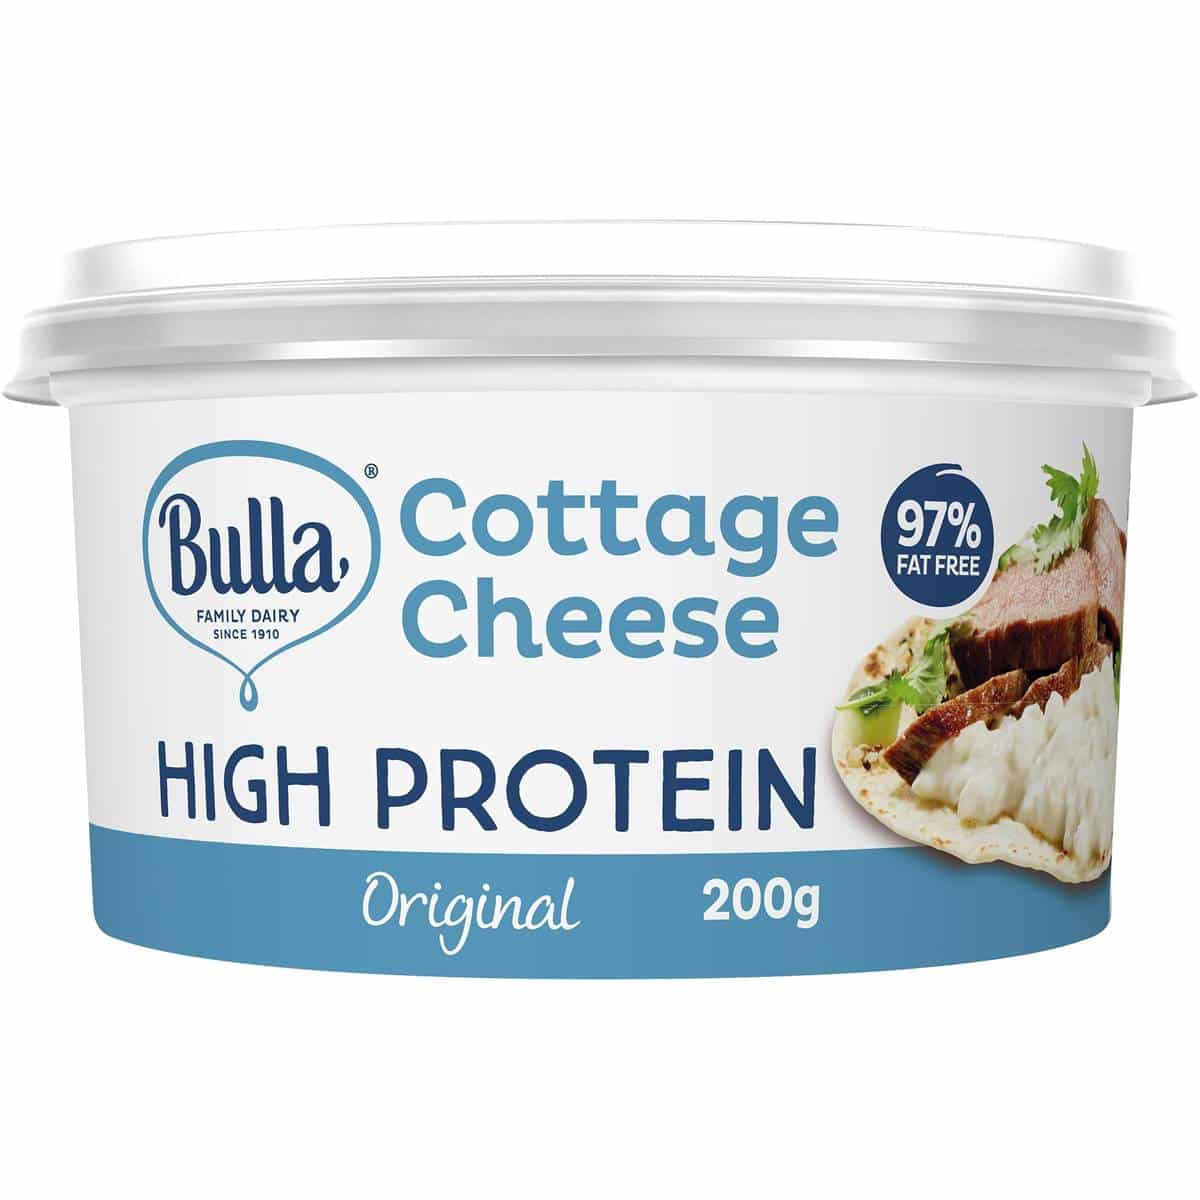 Bulla Cottage Cheese Original